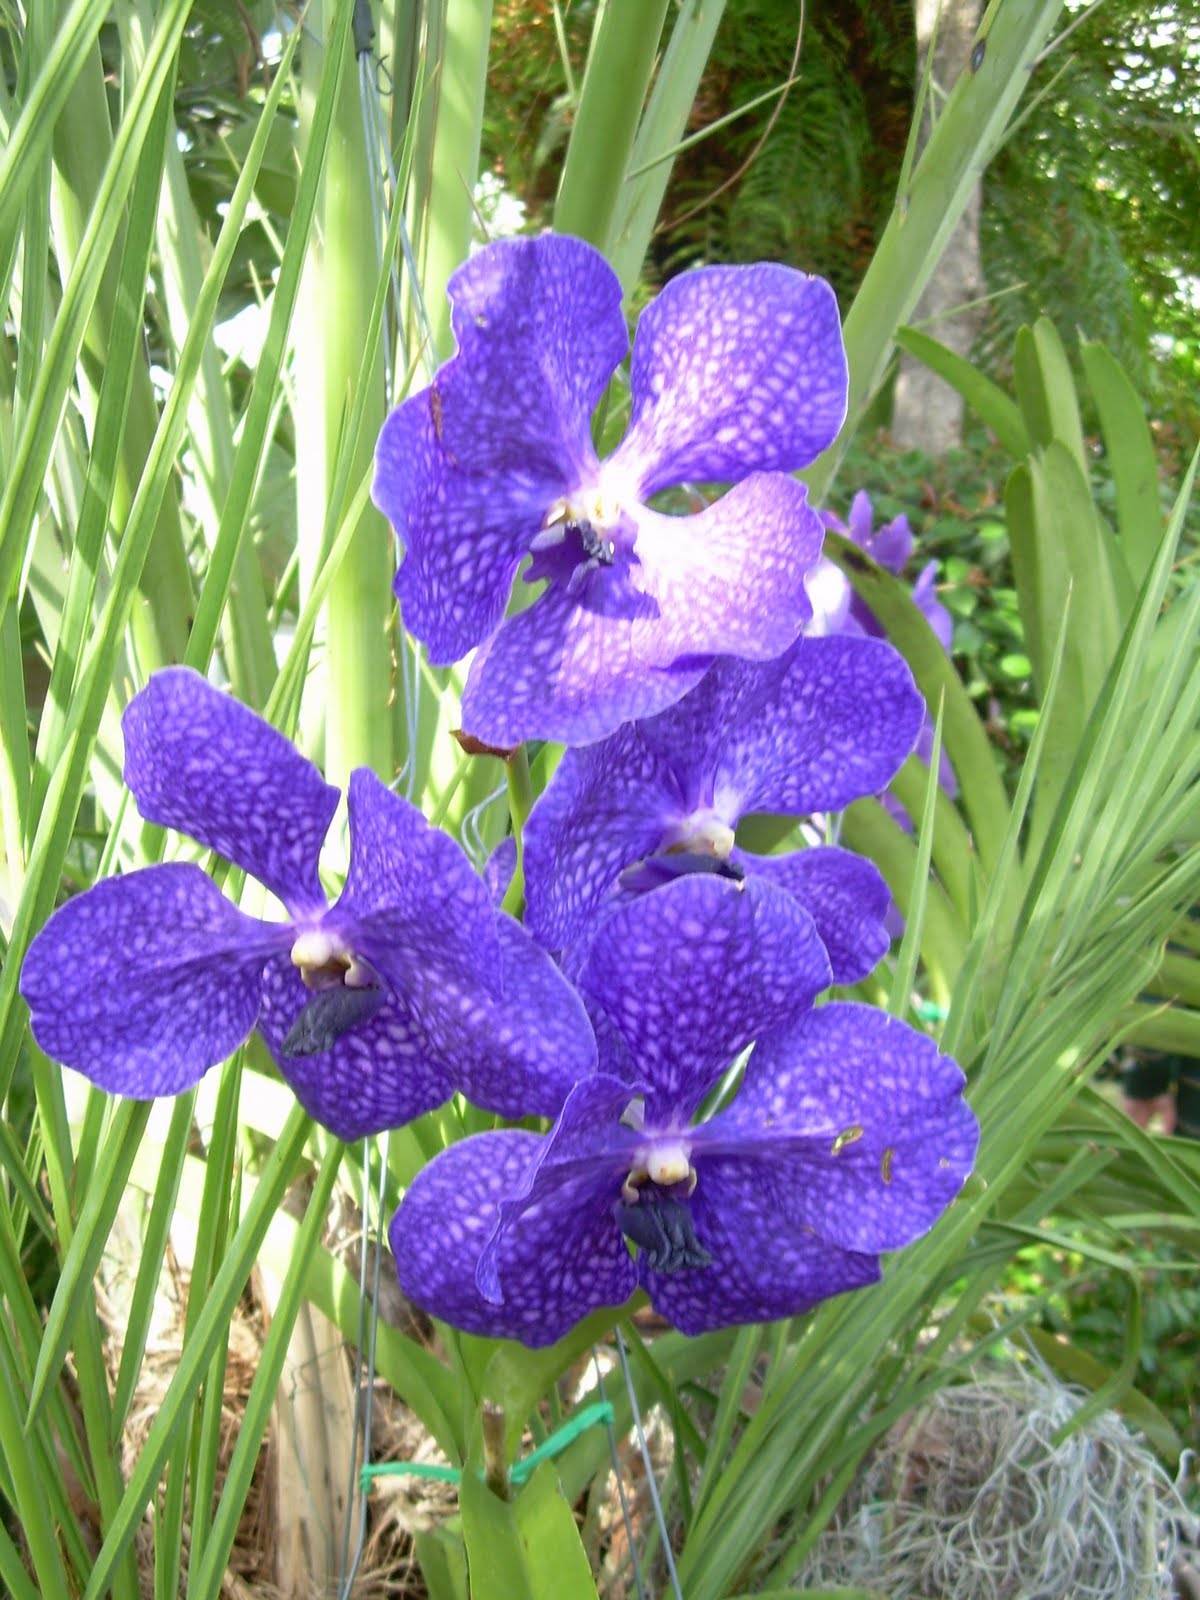 Tampa Botanical Garden Orchids